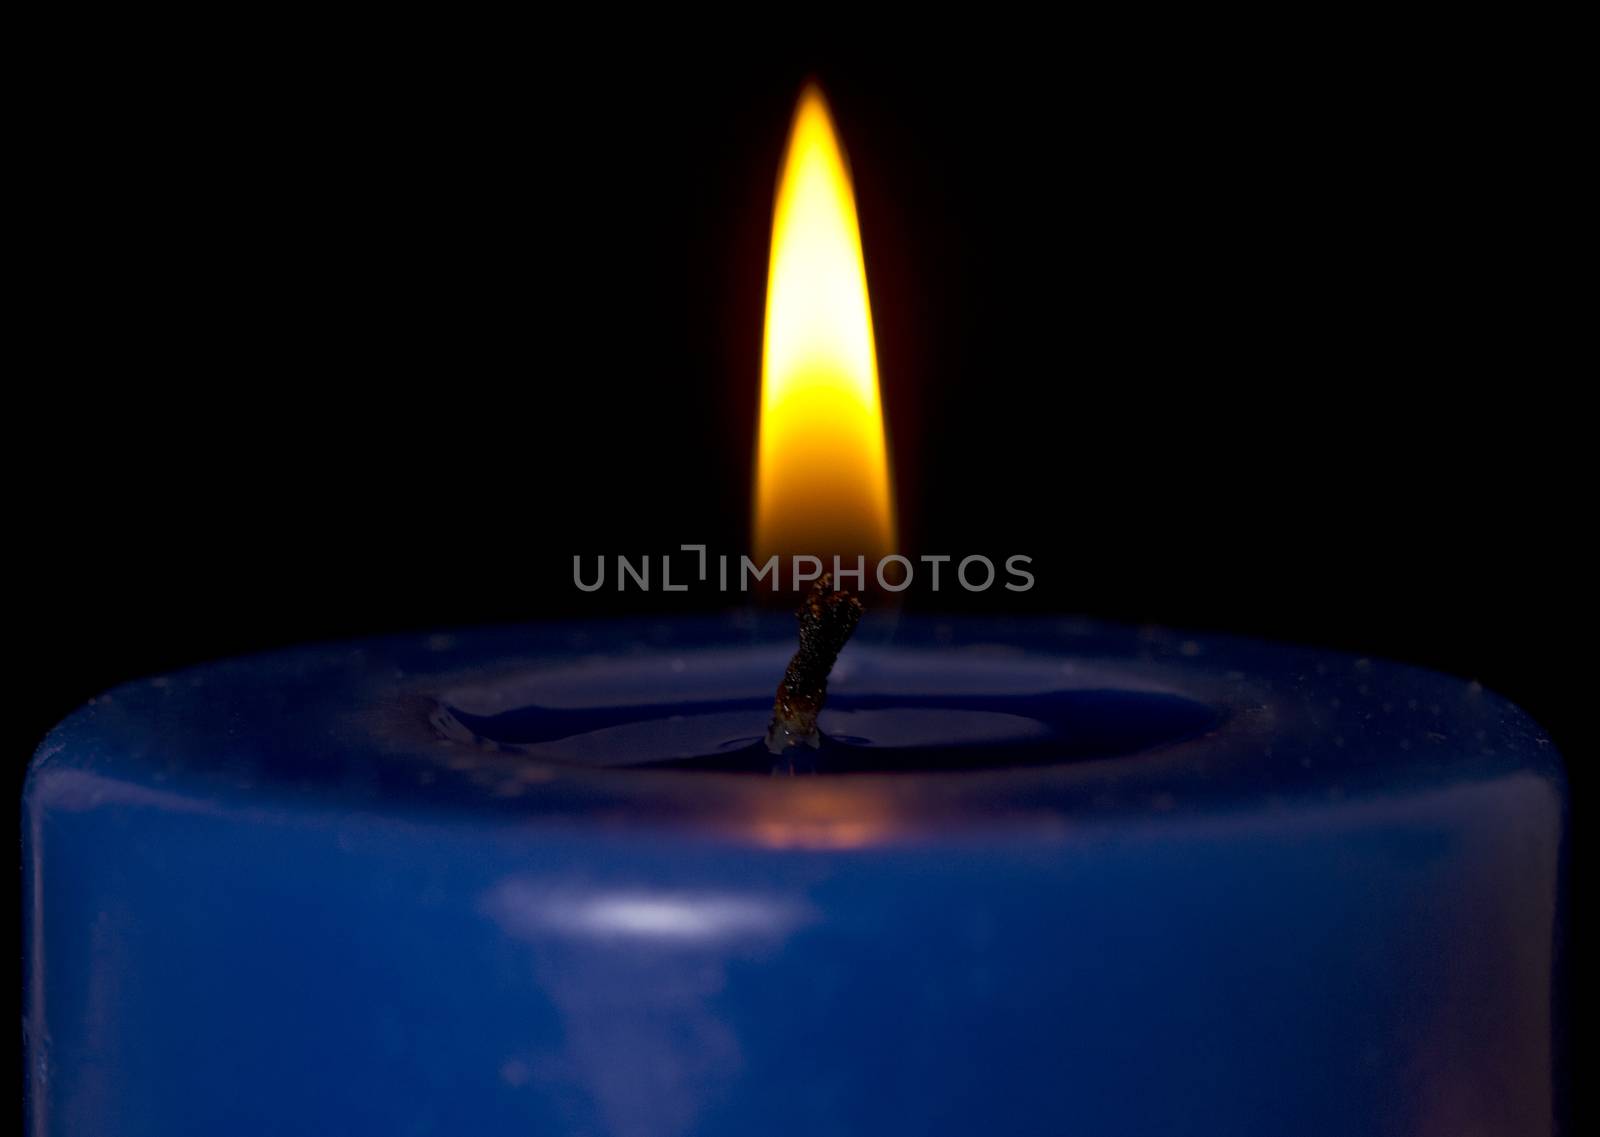 Macro shot of a single candle flame.